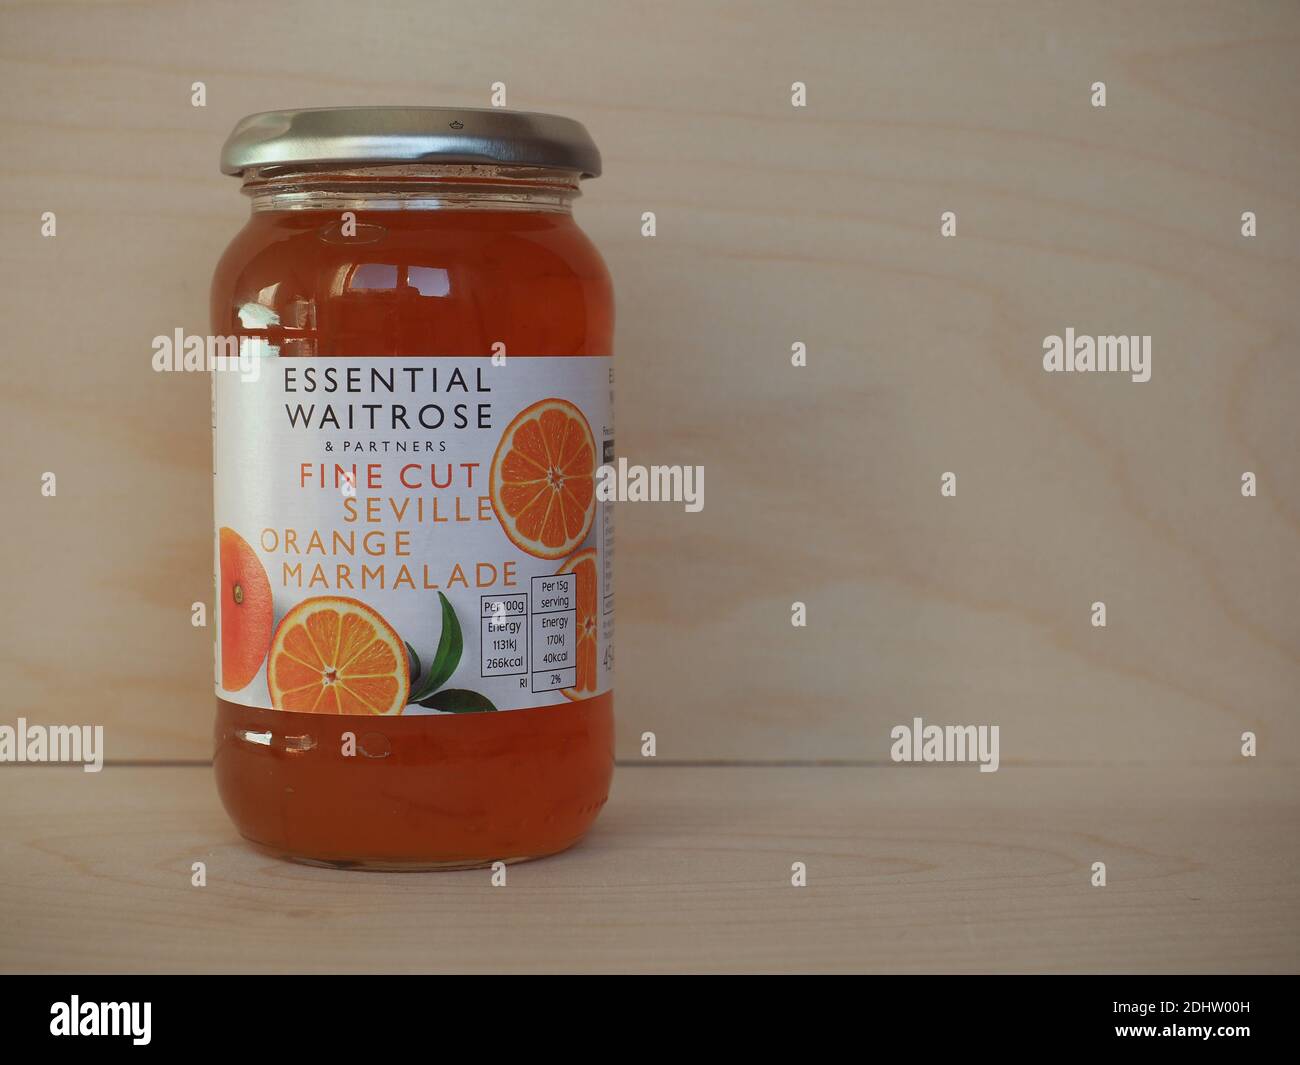 LONDON, UK - CIRCA OCTOBER 2020: Jar of Waitrose fine cut seville orange marmalade Stock Photo